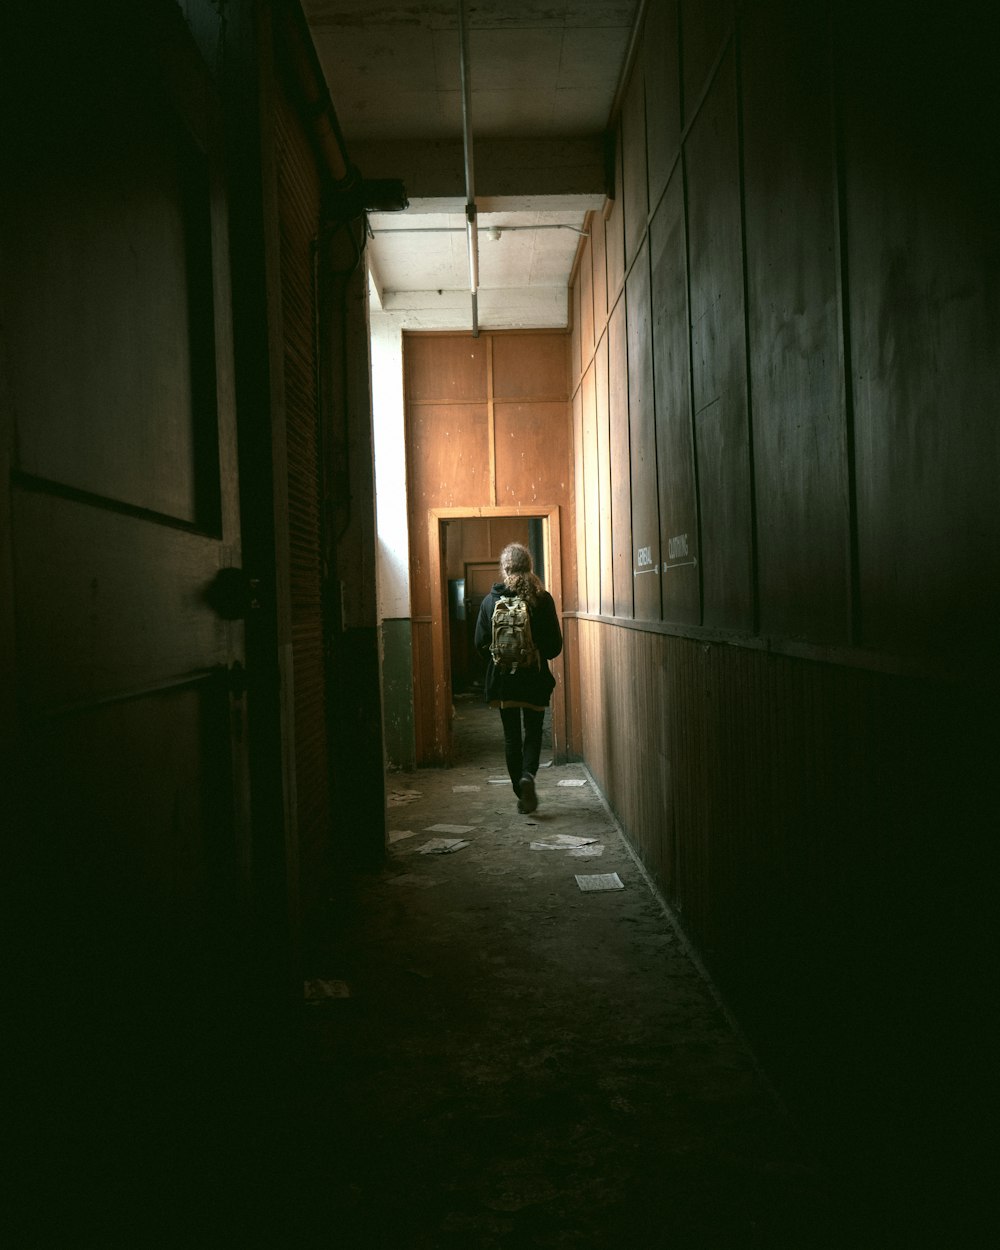 person in black jacket walking on hallway